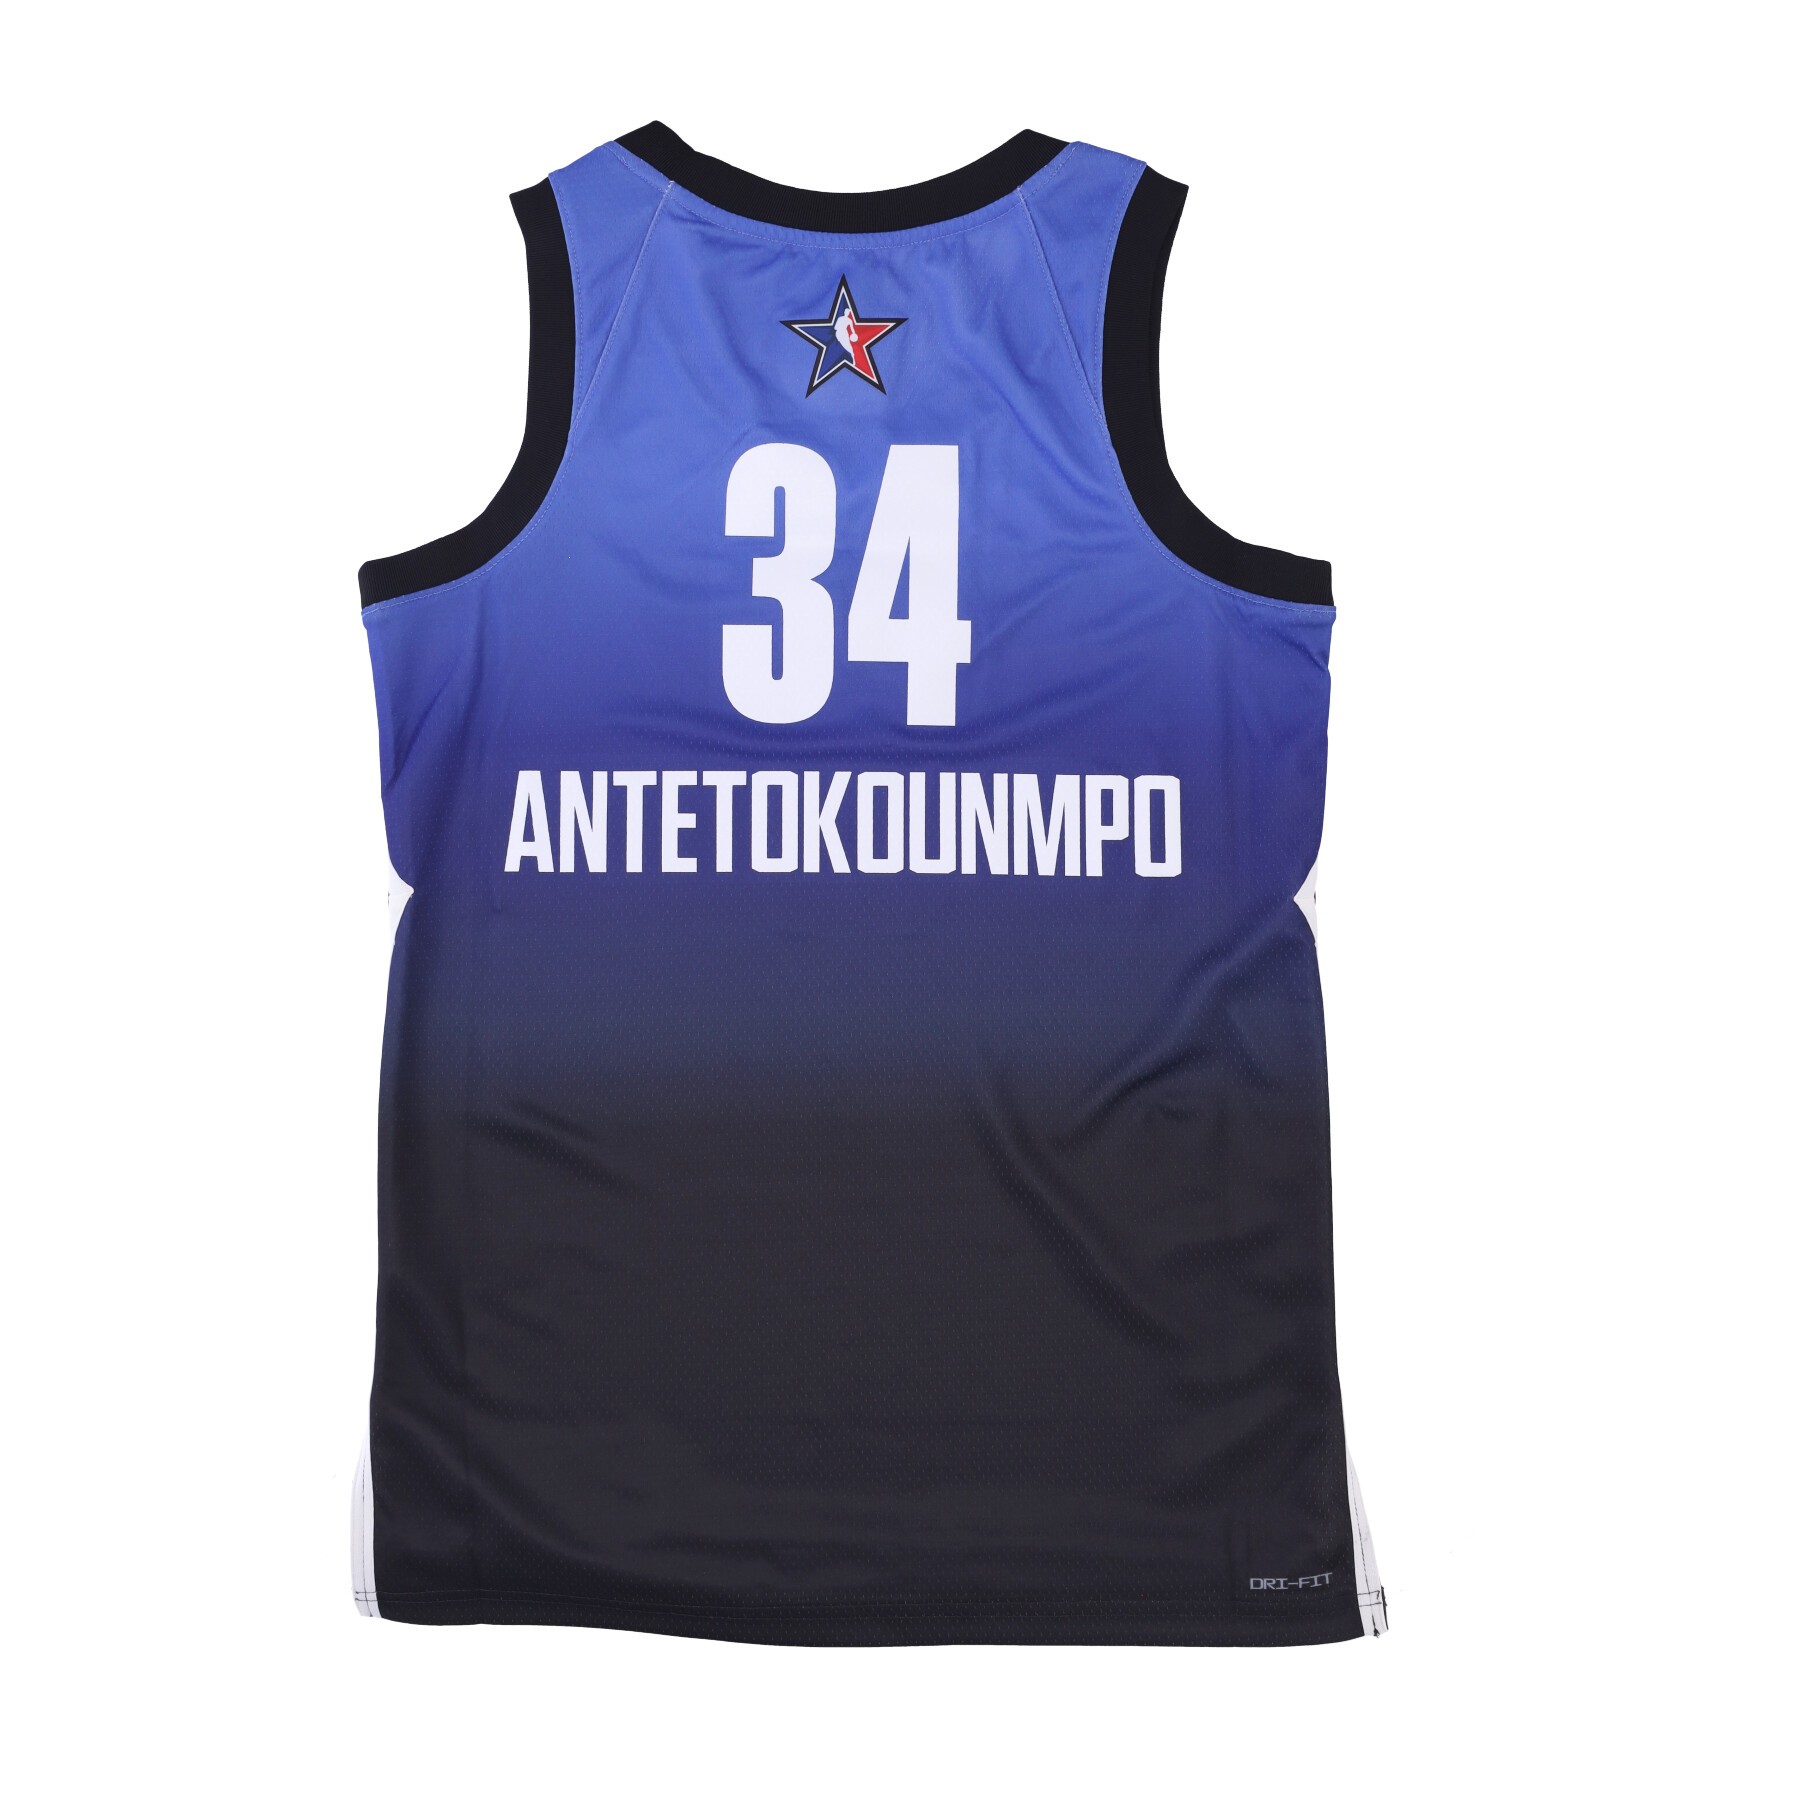 Nike NBA All-Star2020 Swingman Jersey Blue Giannis Antetokounmpo